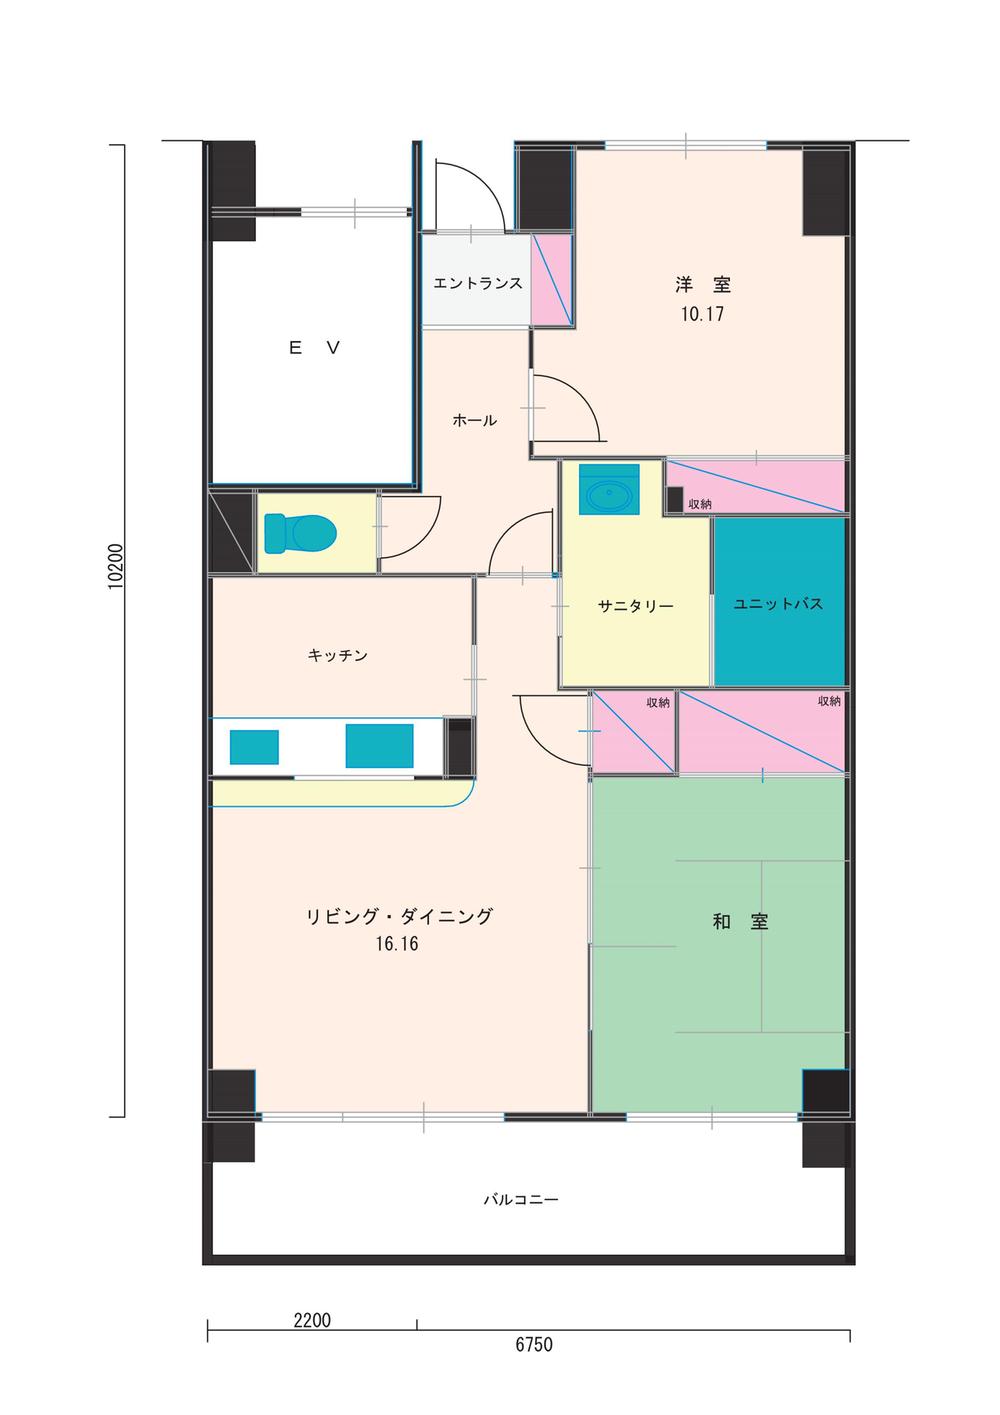 Floor plan. 2LDK, Price 9 million yen, Occupied area 56.39 sq m , Balcony area 7.09 sq m